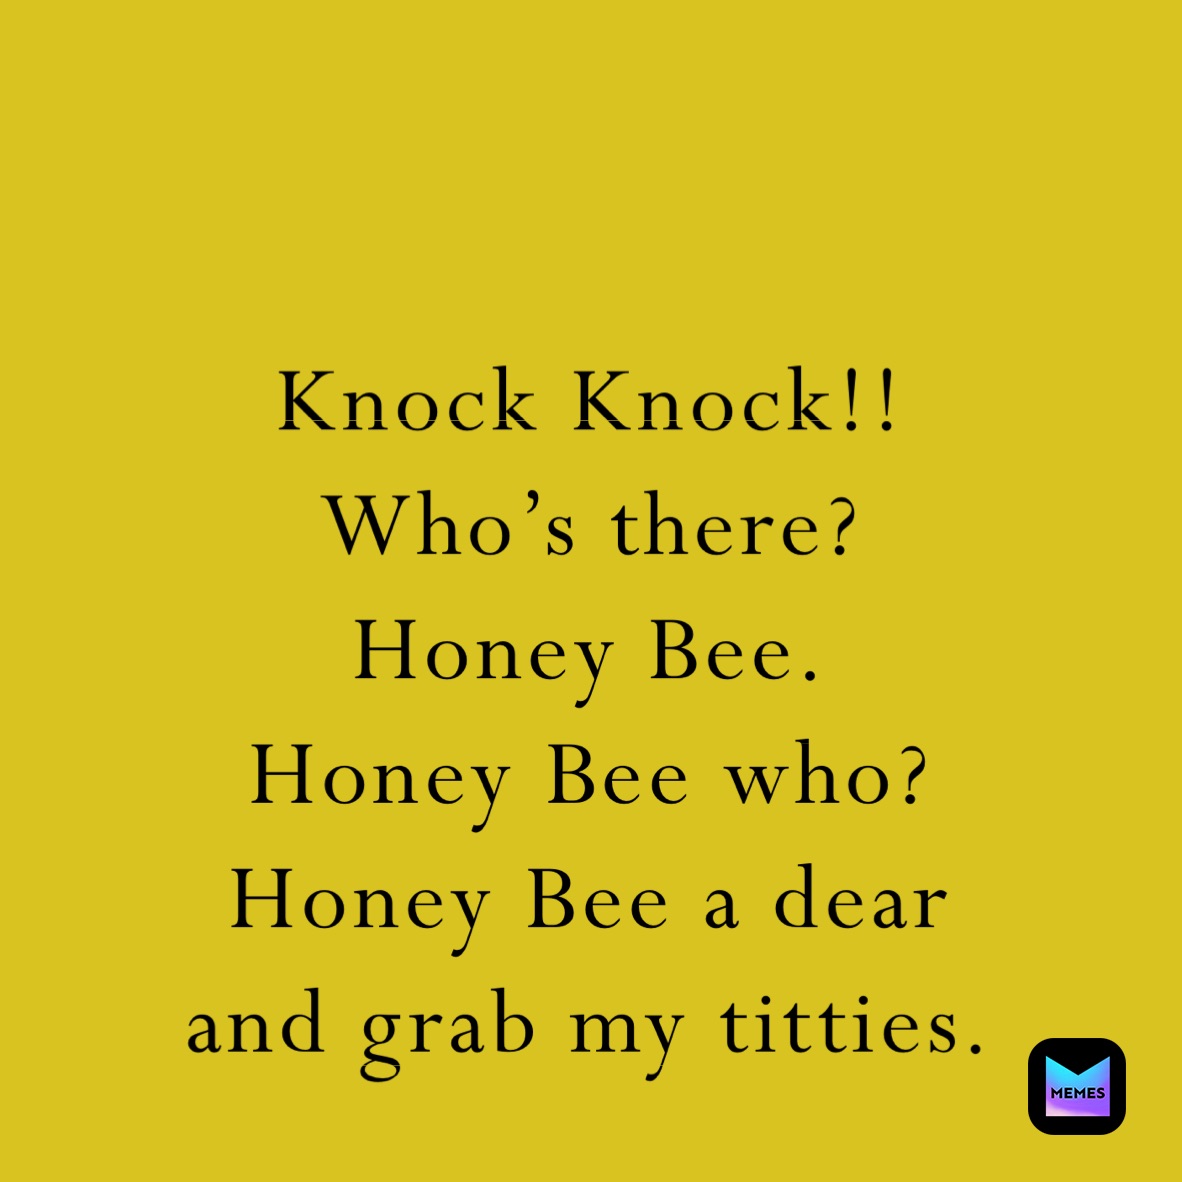 

Knock Knock!!
Who’s there?
Honey Bee.
Honey Bee who?
Honey Bee a dear 
and grab my titties.